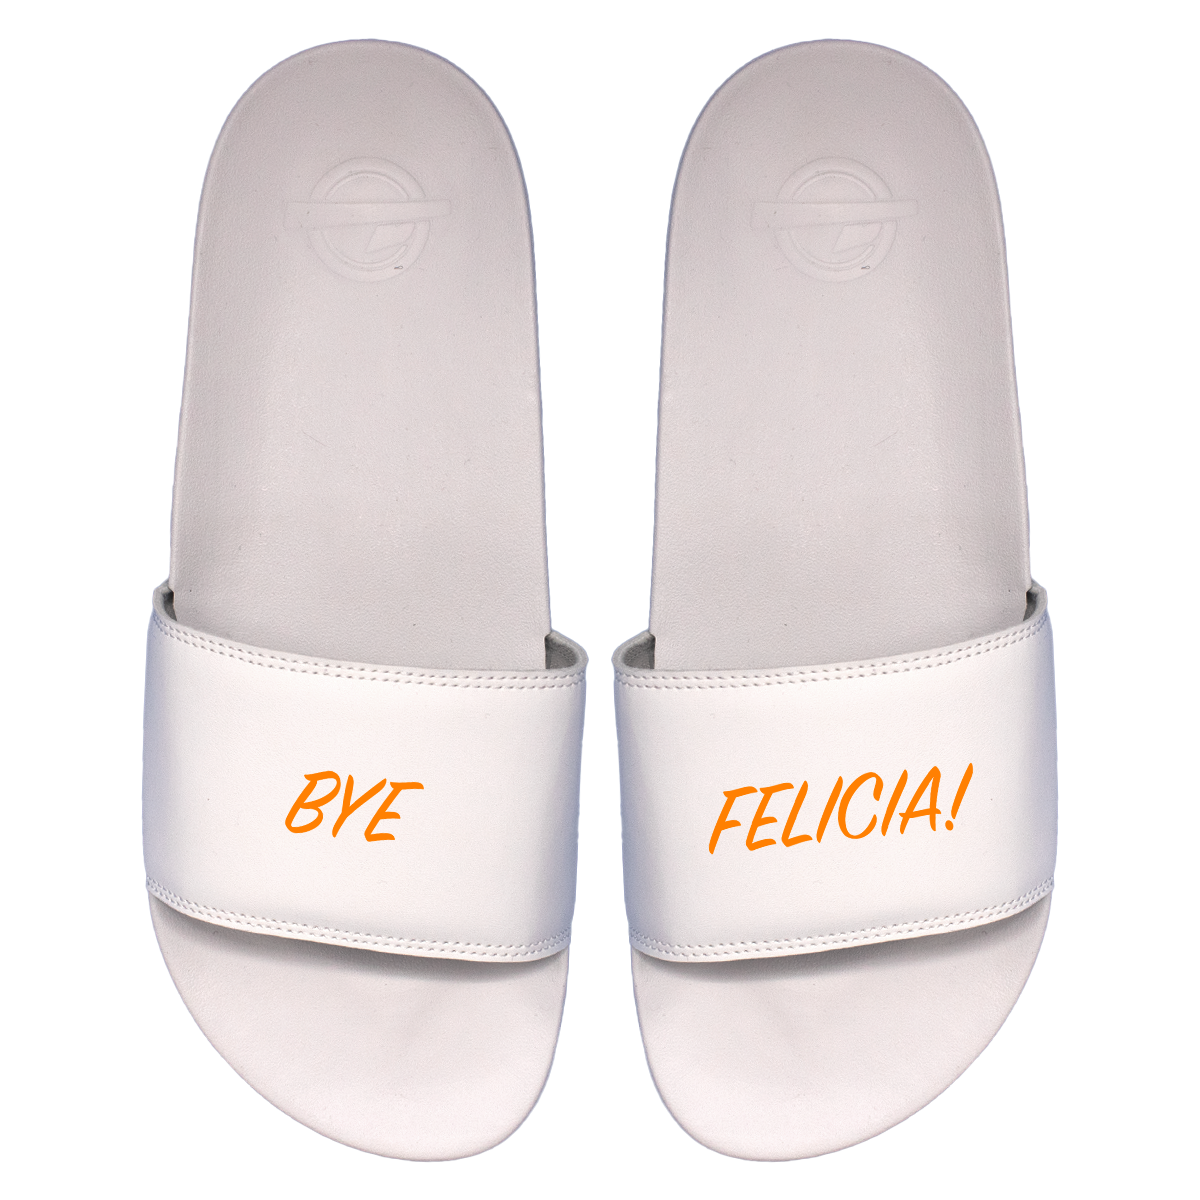 Bye Felicia Motto Slides